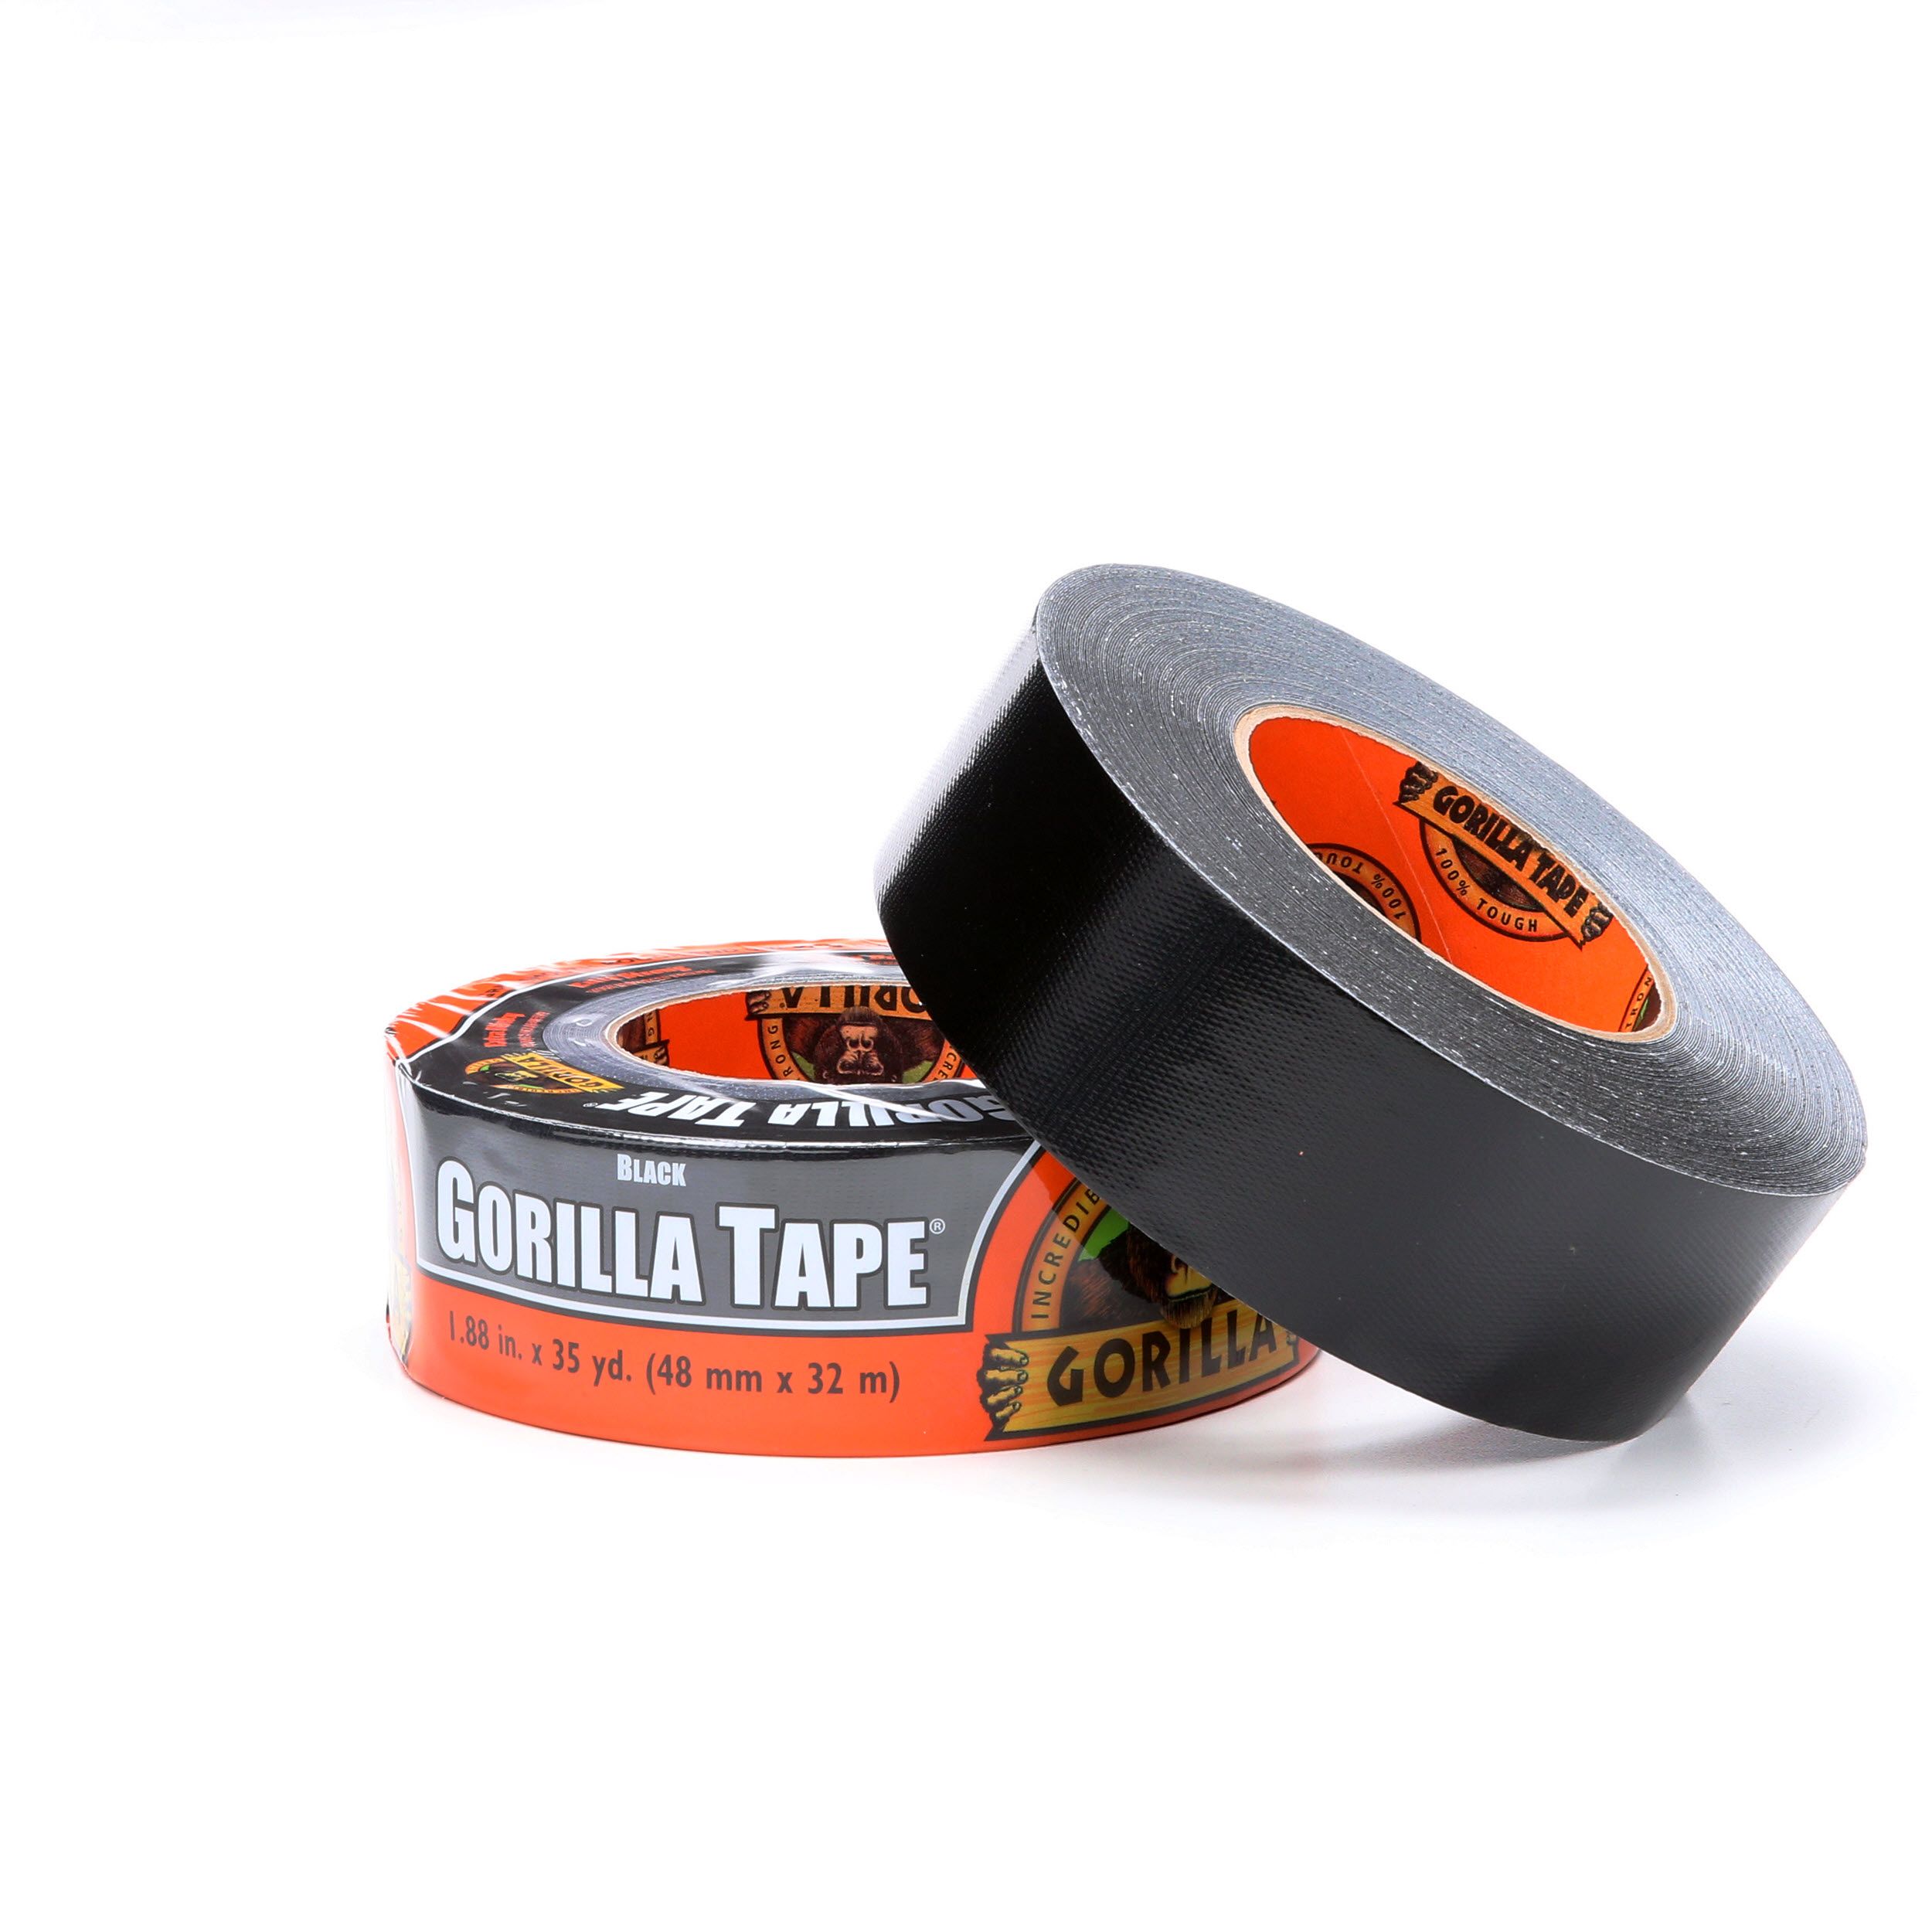 Gorilla Tape Black Duct Tape Black, Pack of 2 1.88" x 35 yd 